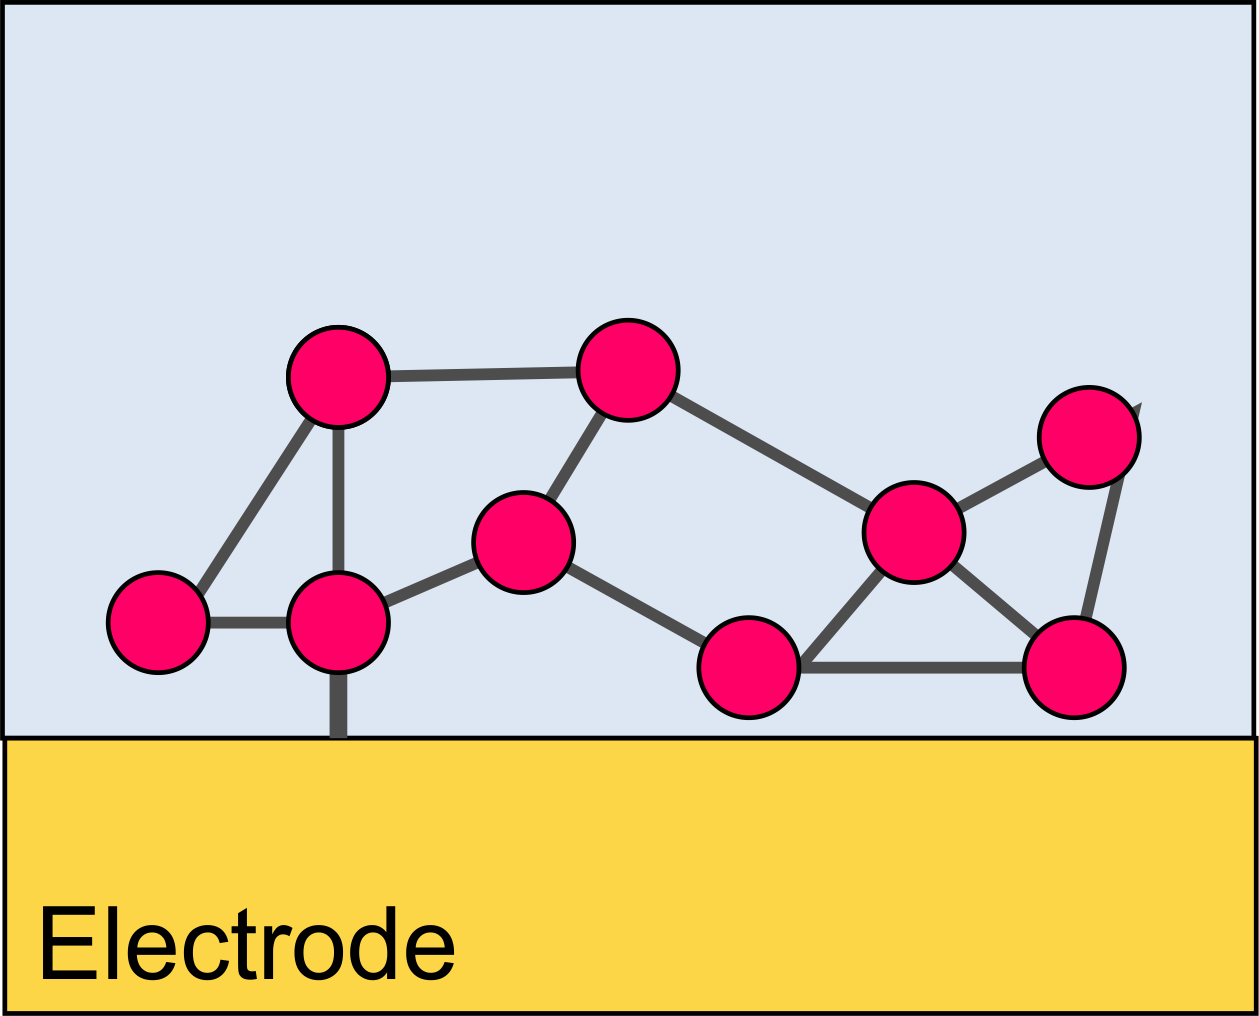 Scheme cross-linking